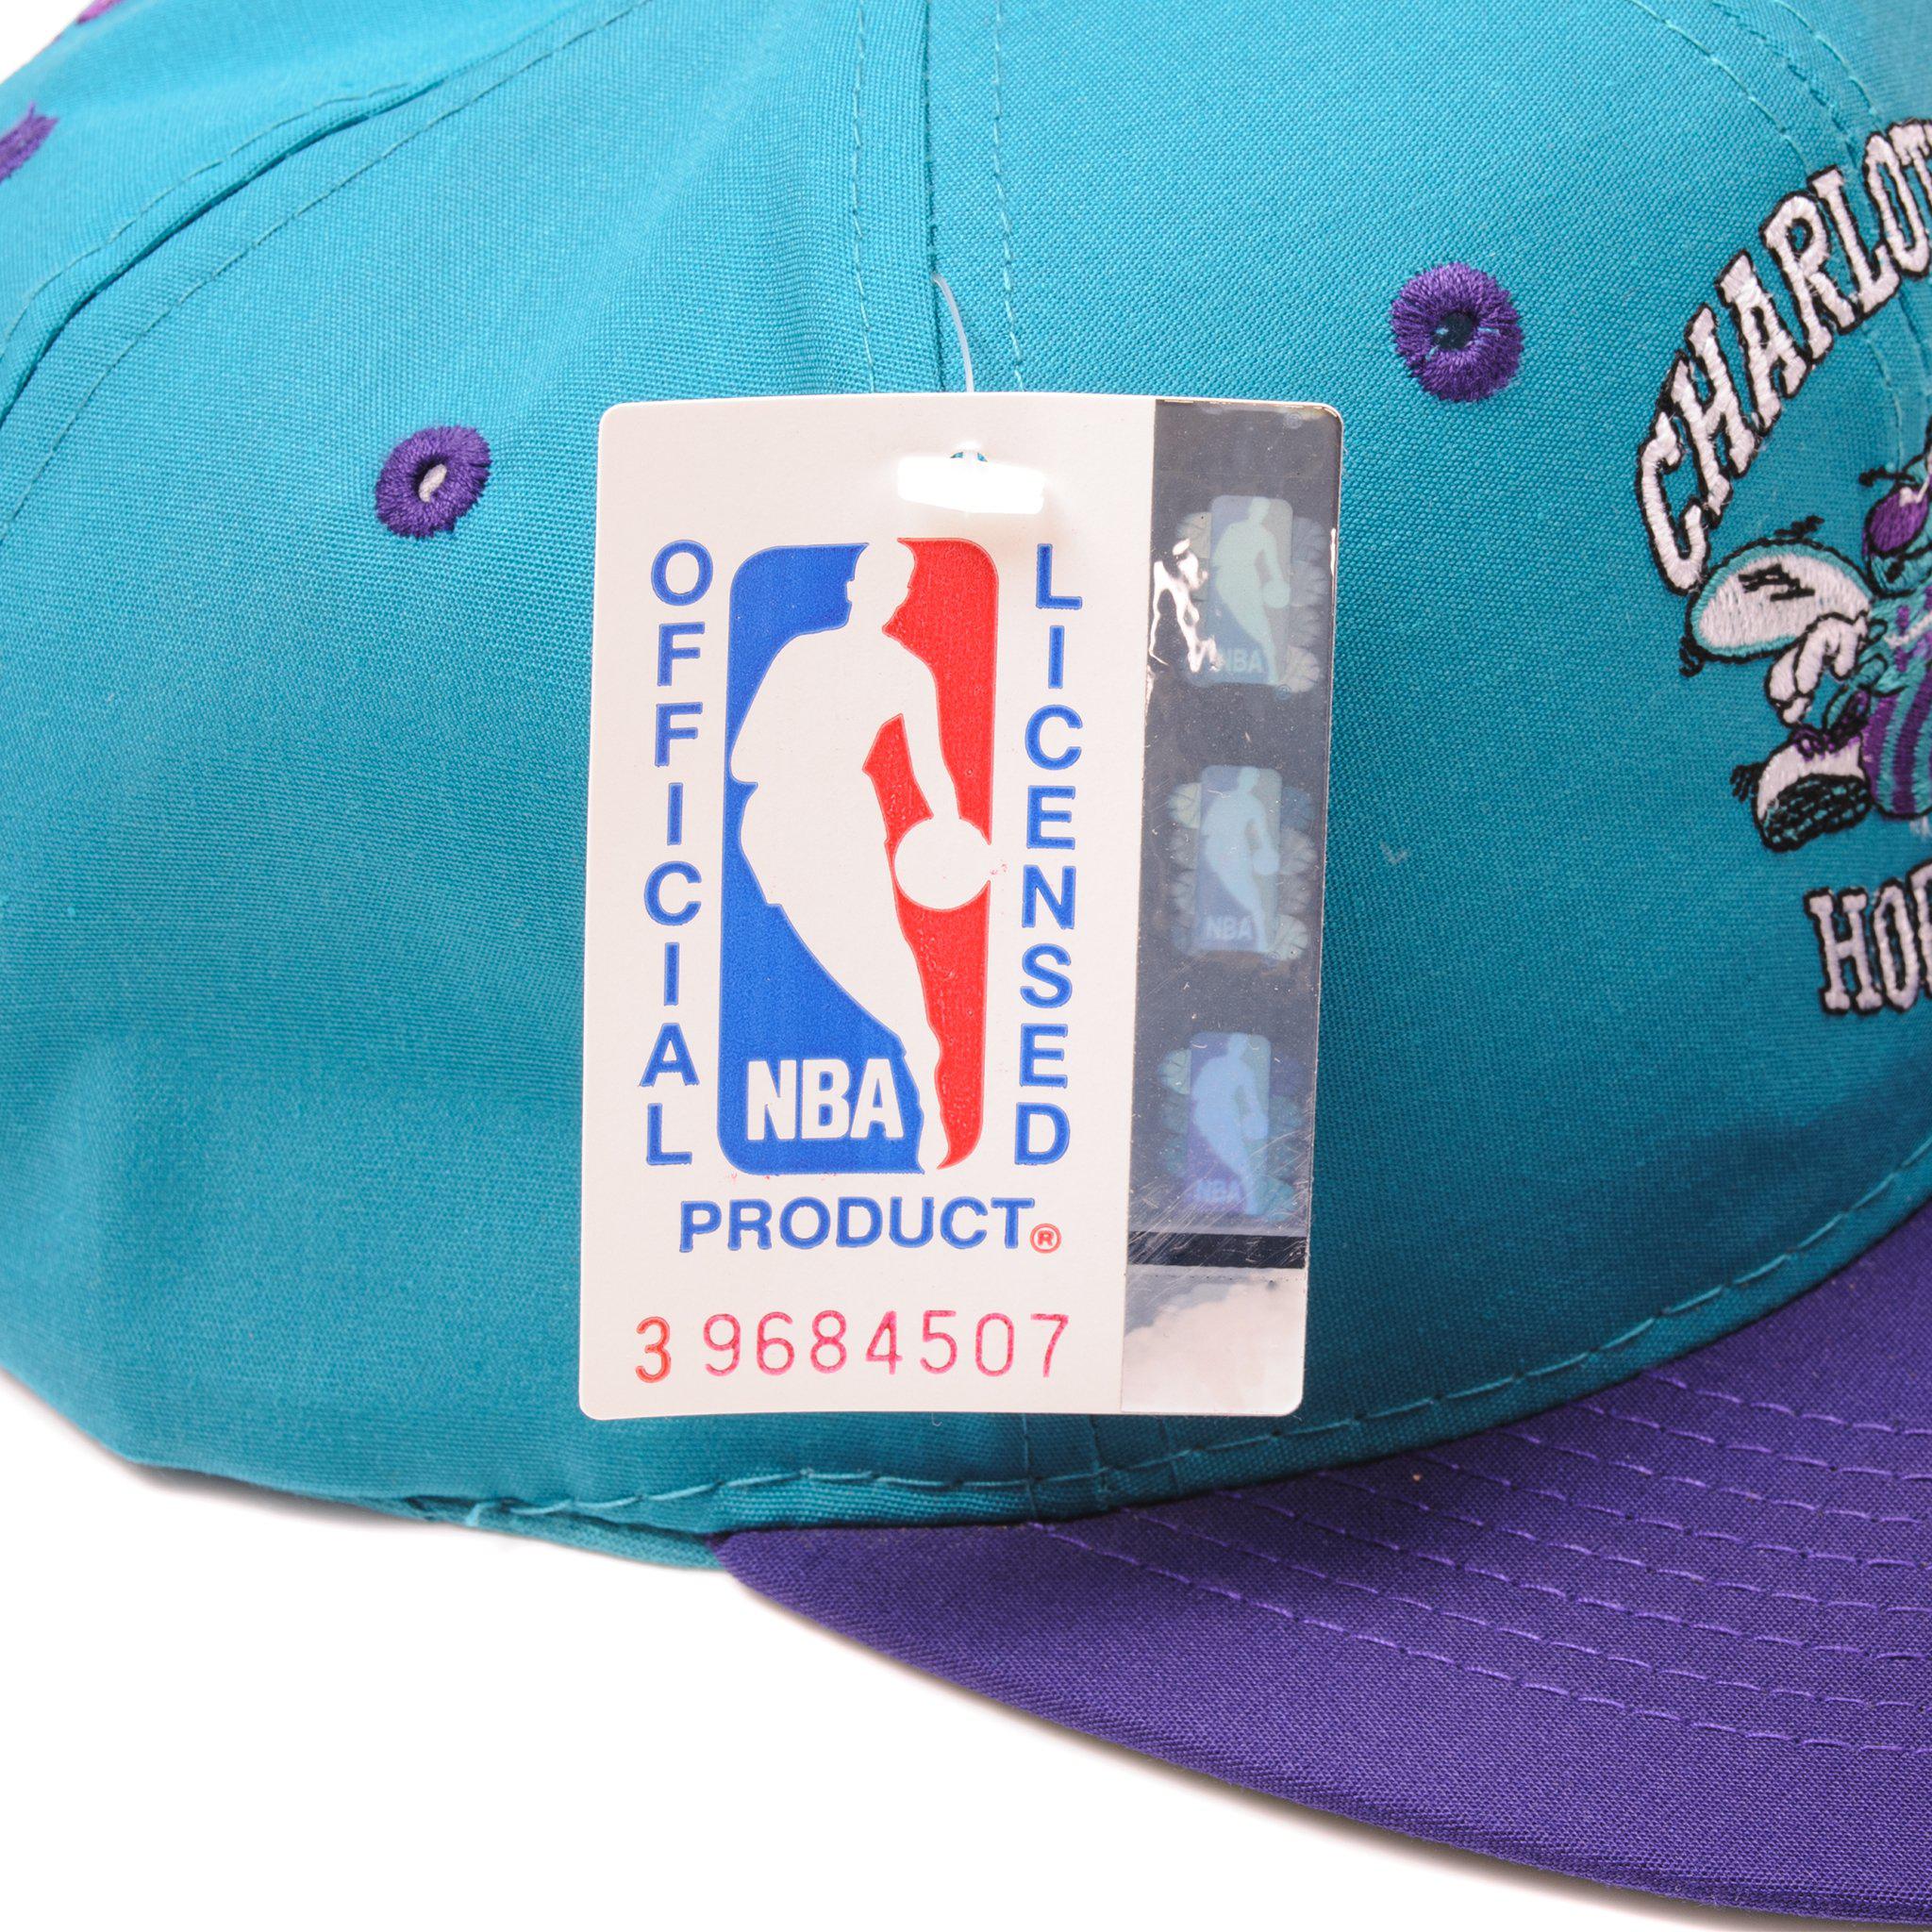 Vintage Charlotte Hornets Snapback Hat 90s Basketball NBA